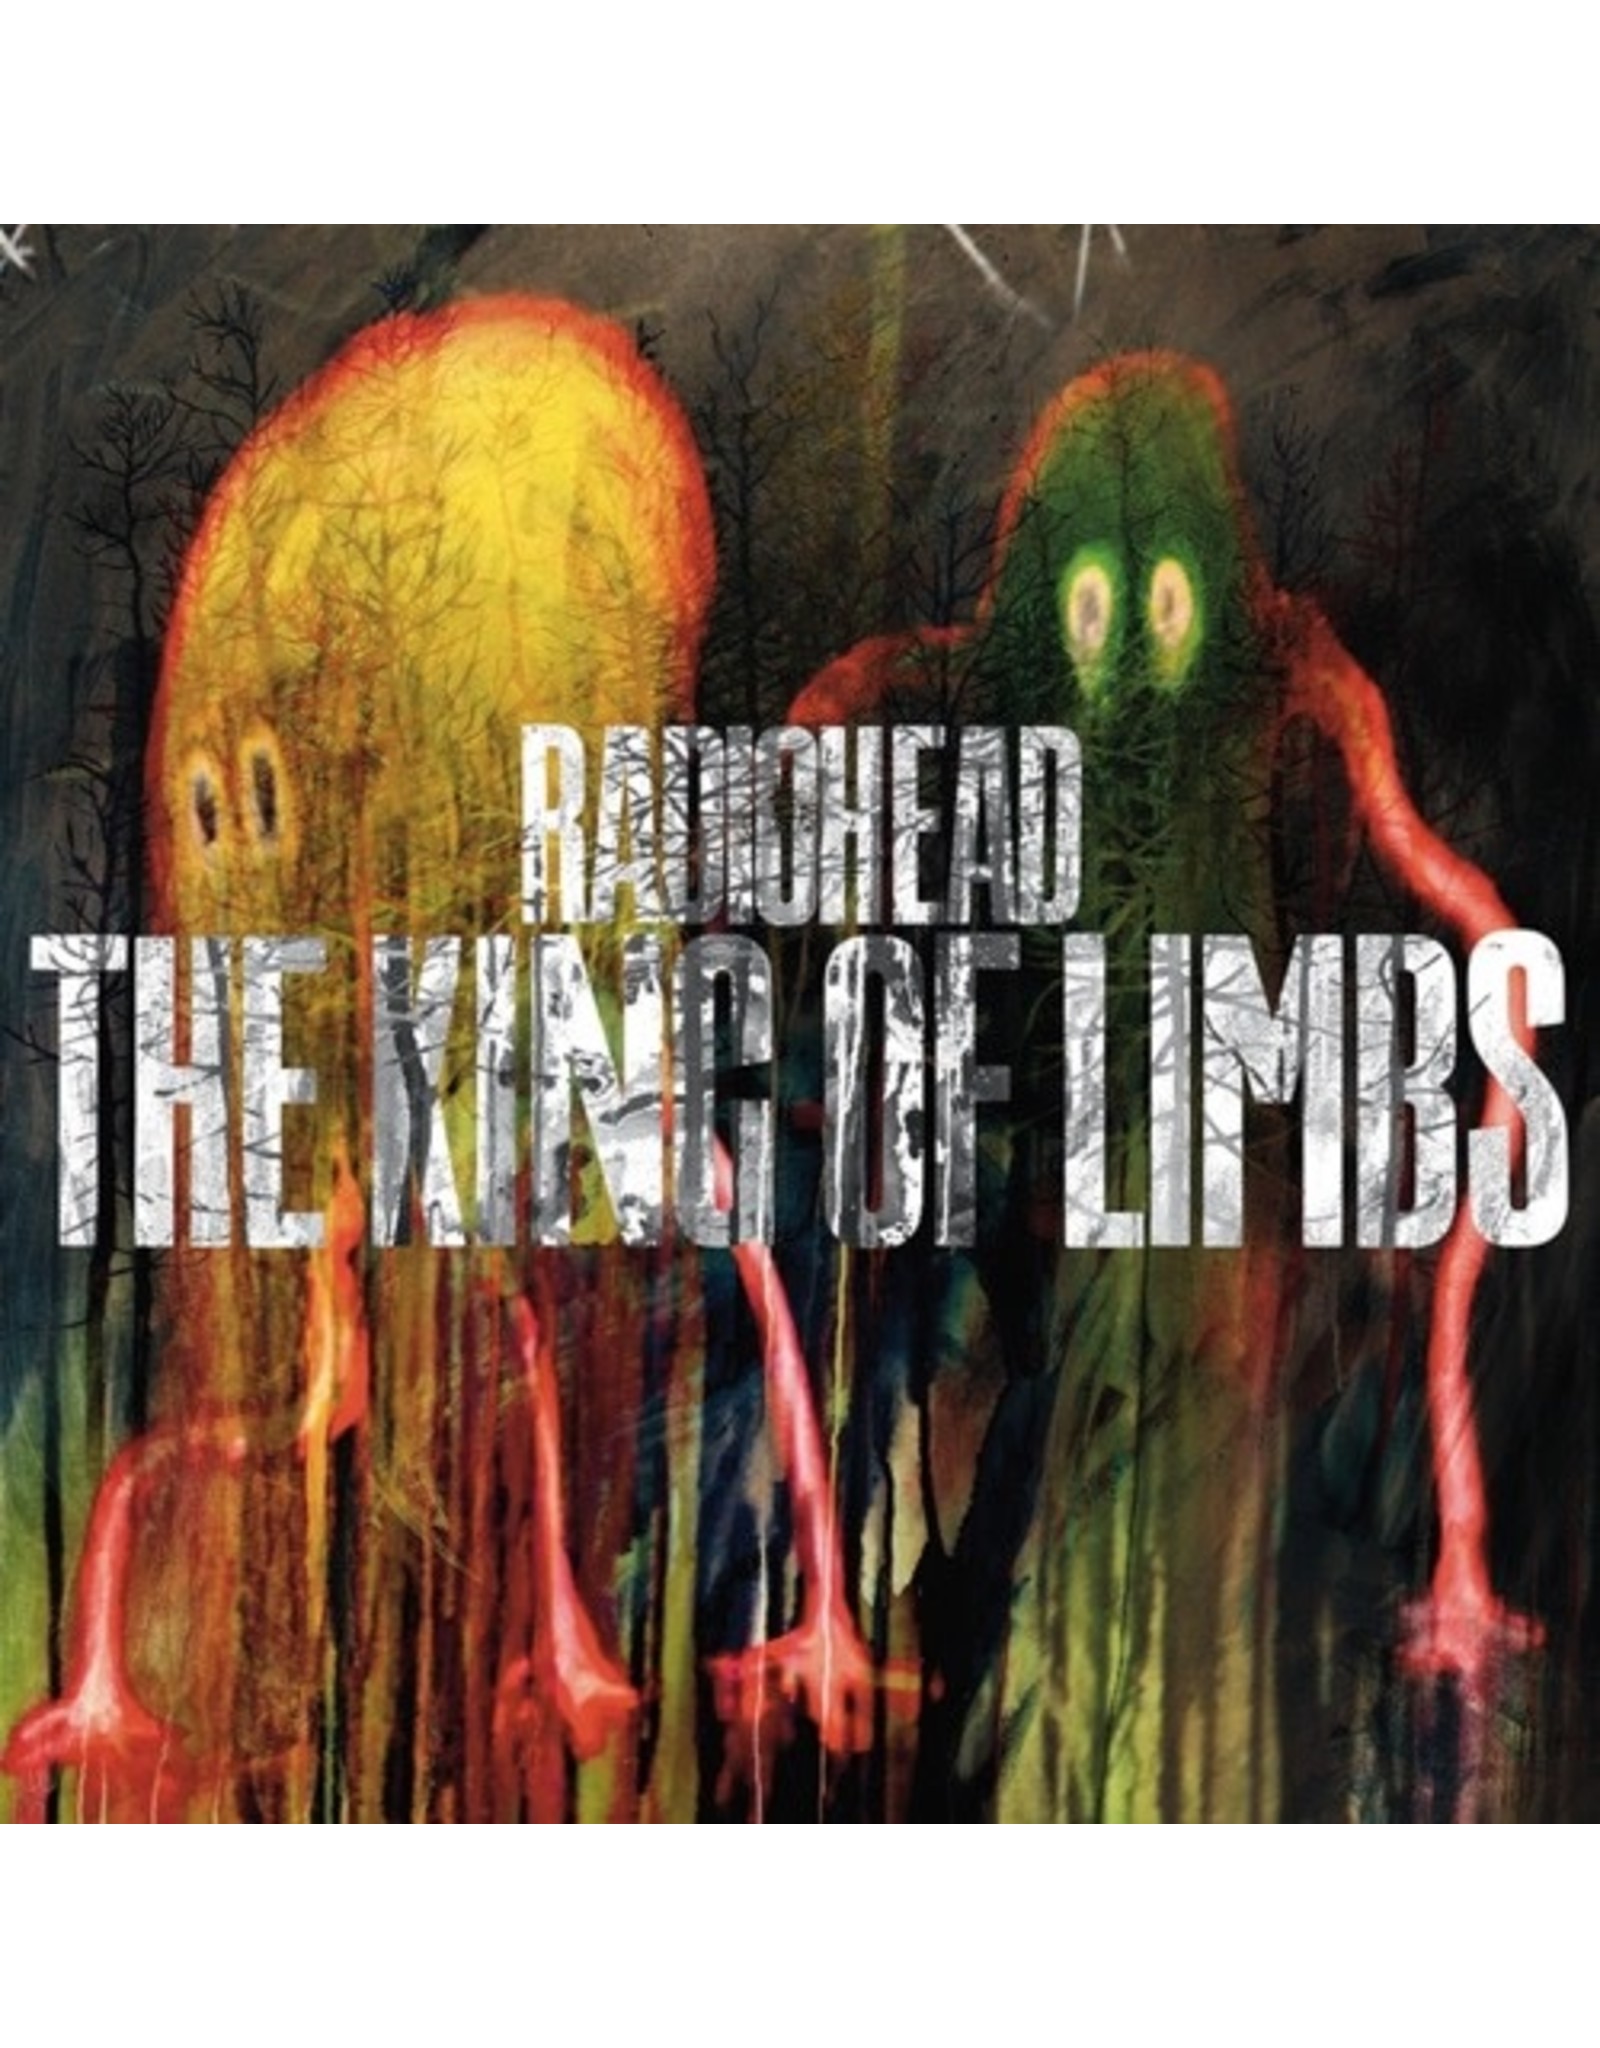 XL Radiohead: The King of Limbs LP